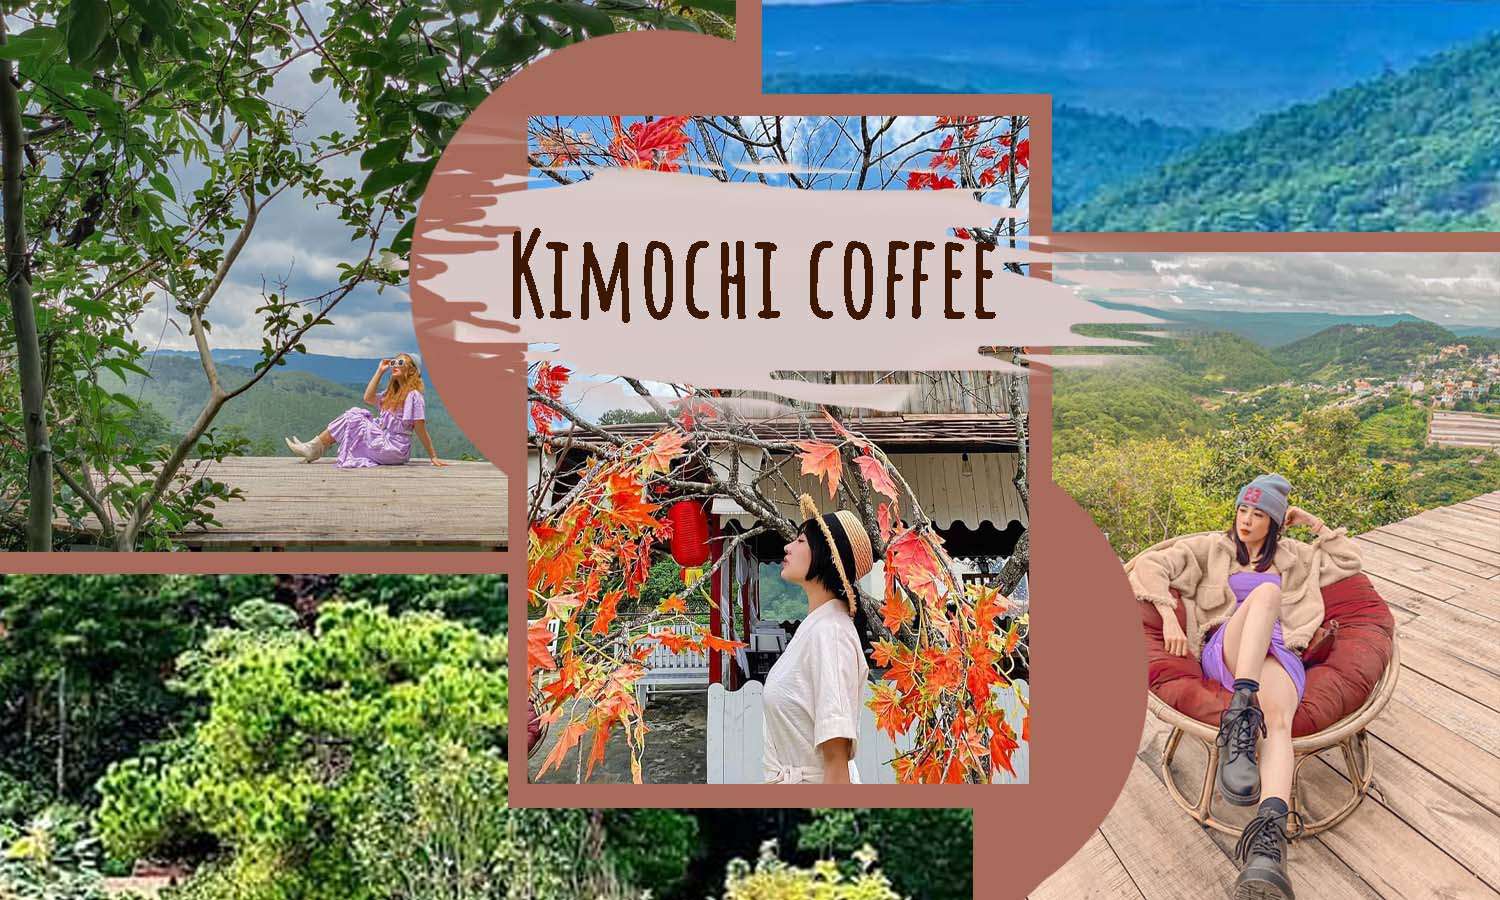 Kimochi coffee